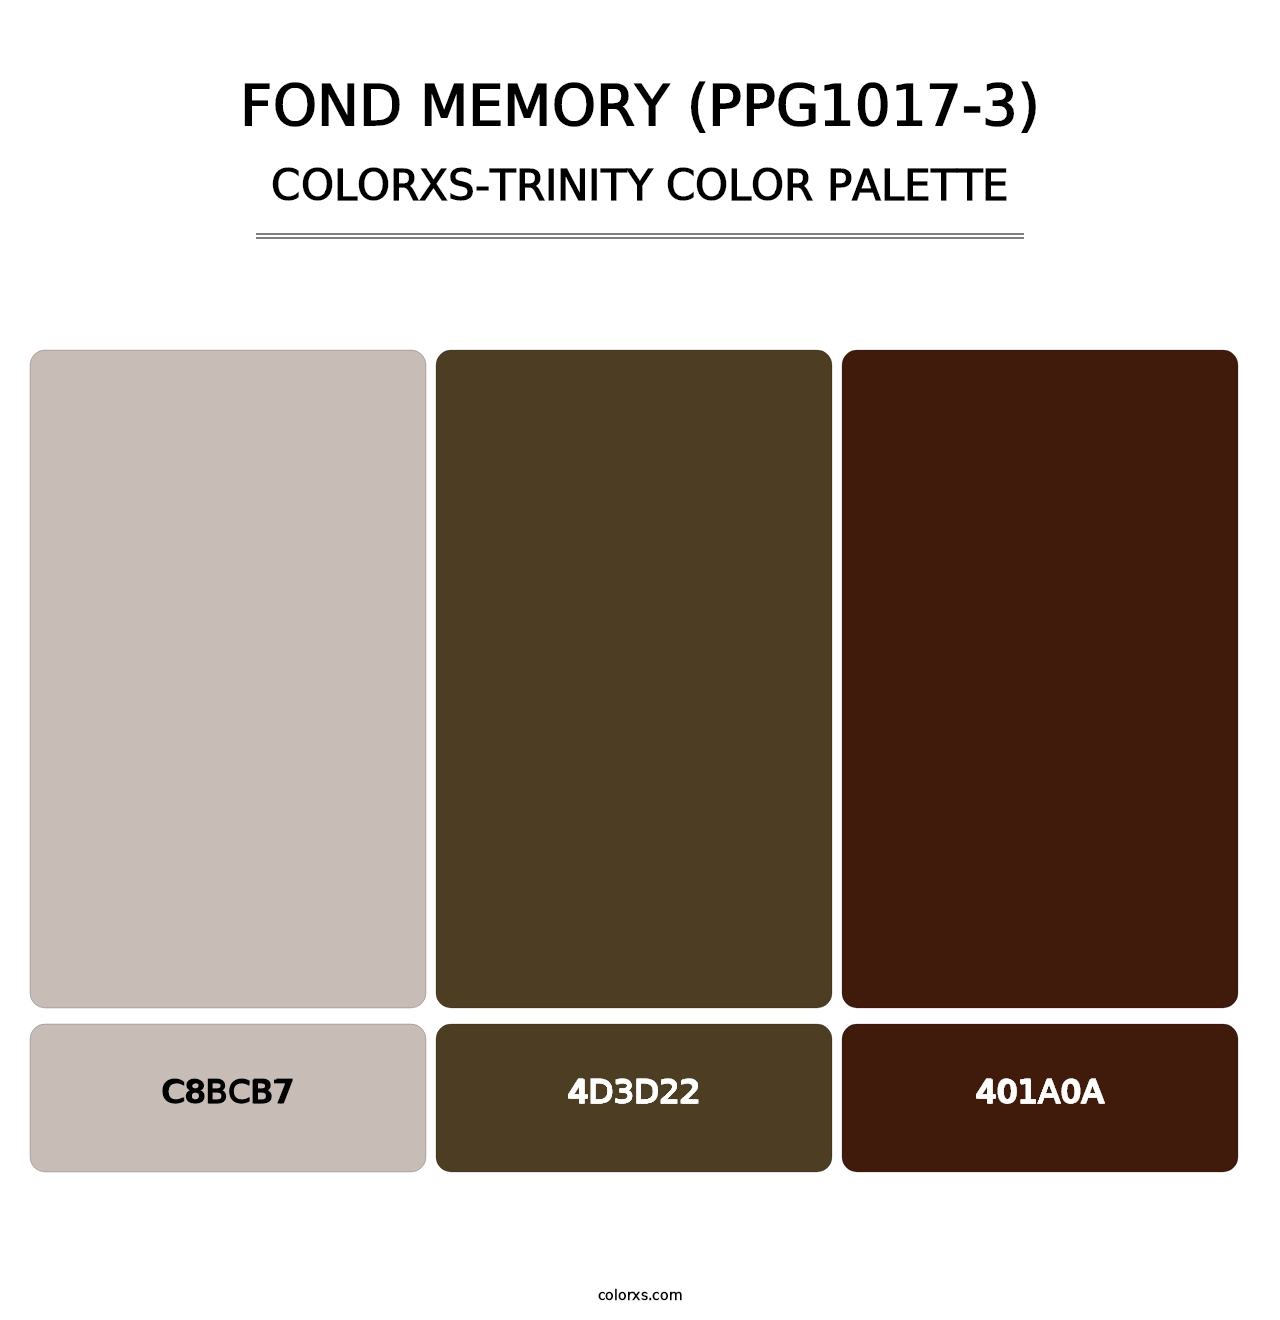 Fond Memory (PPG1017-3) - Colorxs Trinity Palette